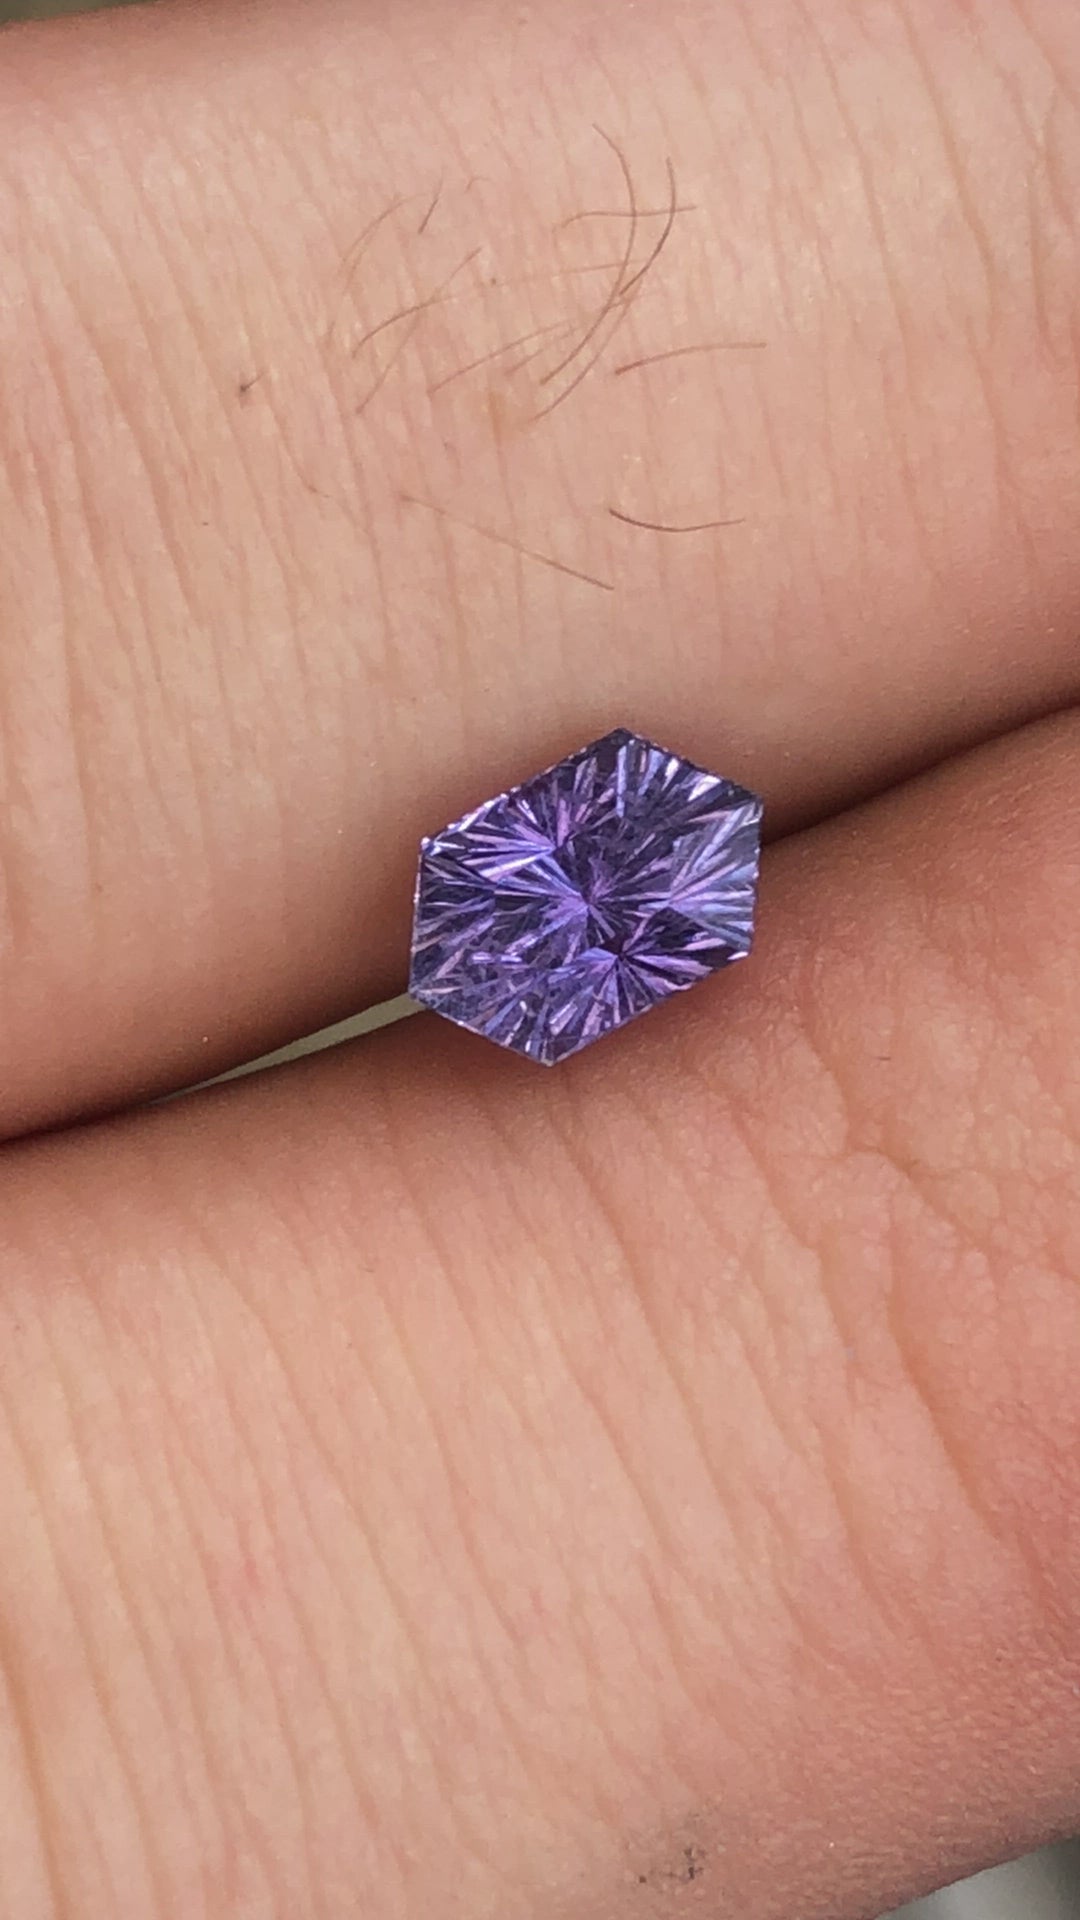 Hexagone Saphir Violet Taille Fantaisie - Saphir Taille Rupee - 1.12 carats 7x4.5mm